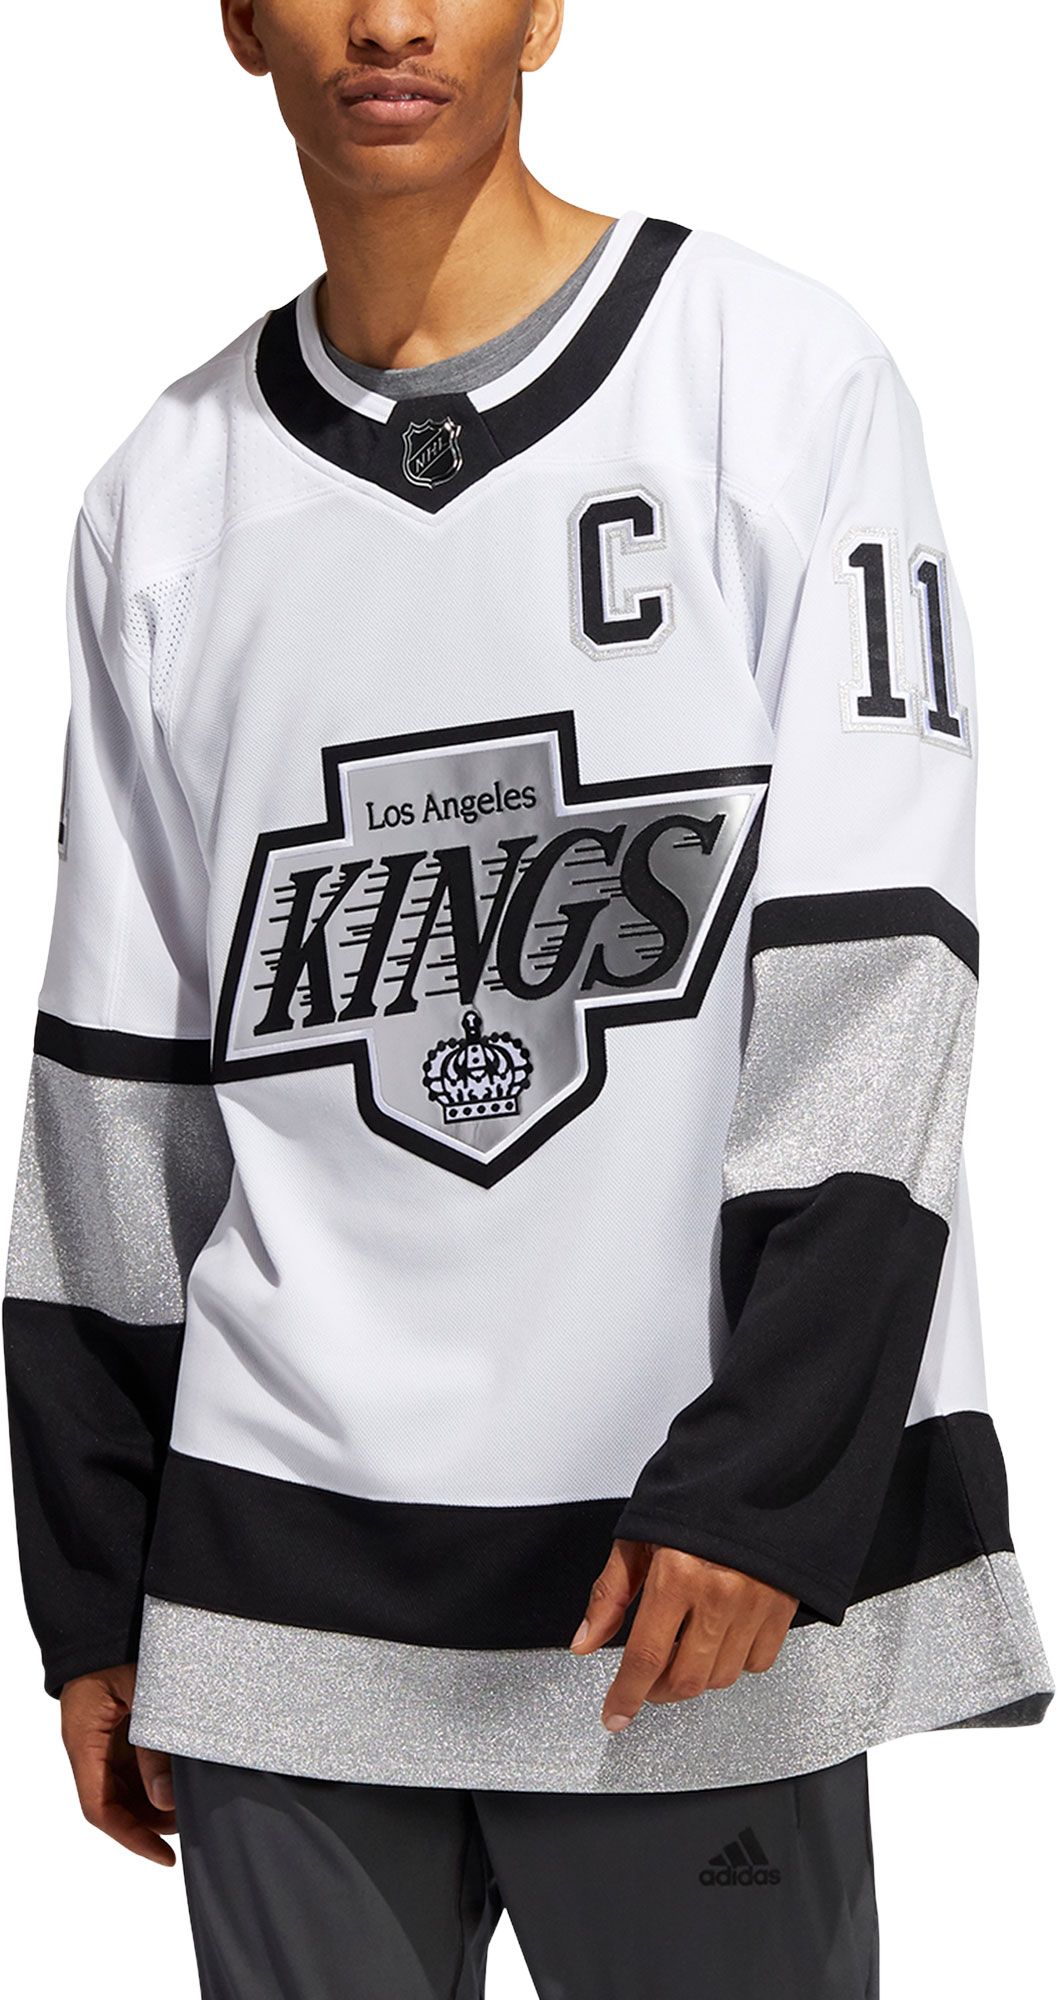 Los Angeles Kings alternate captain's jersey